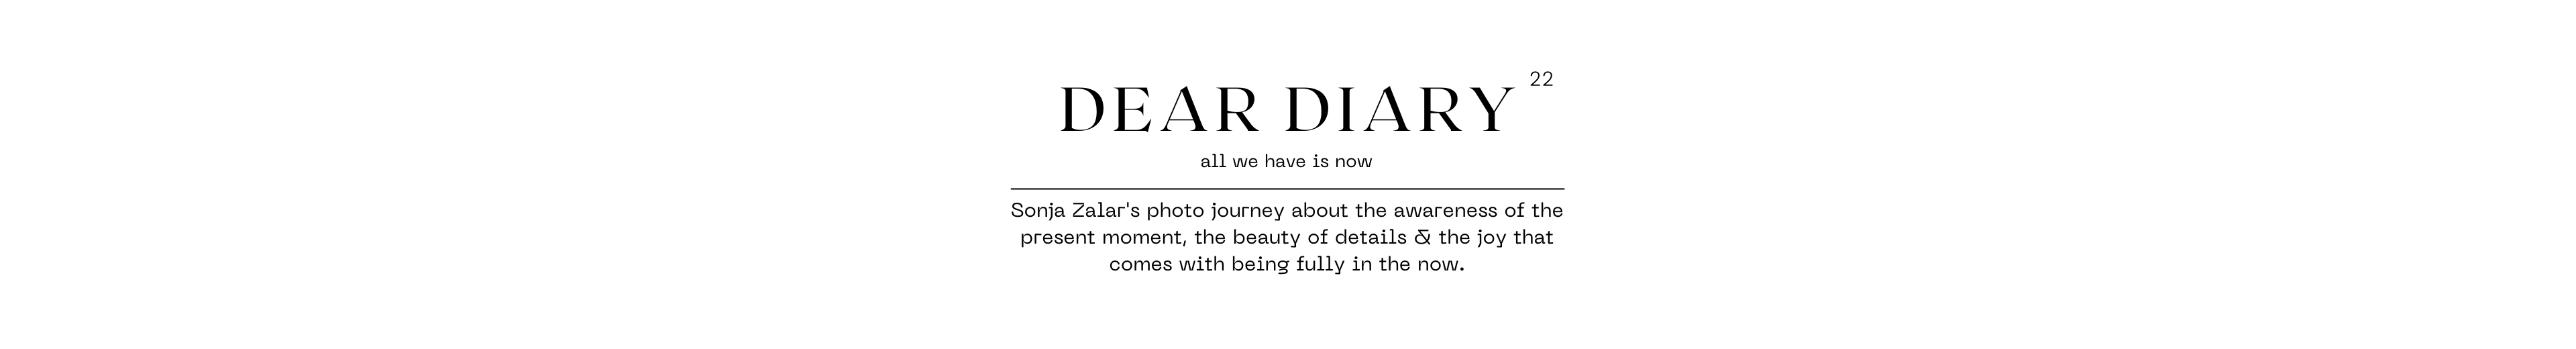 Dear Diary 22 banner